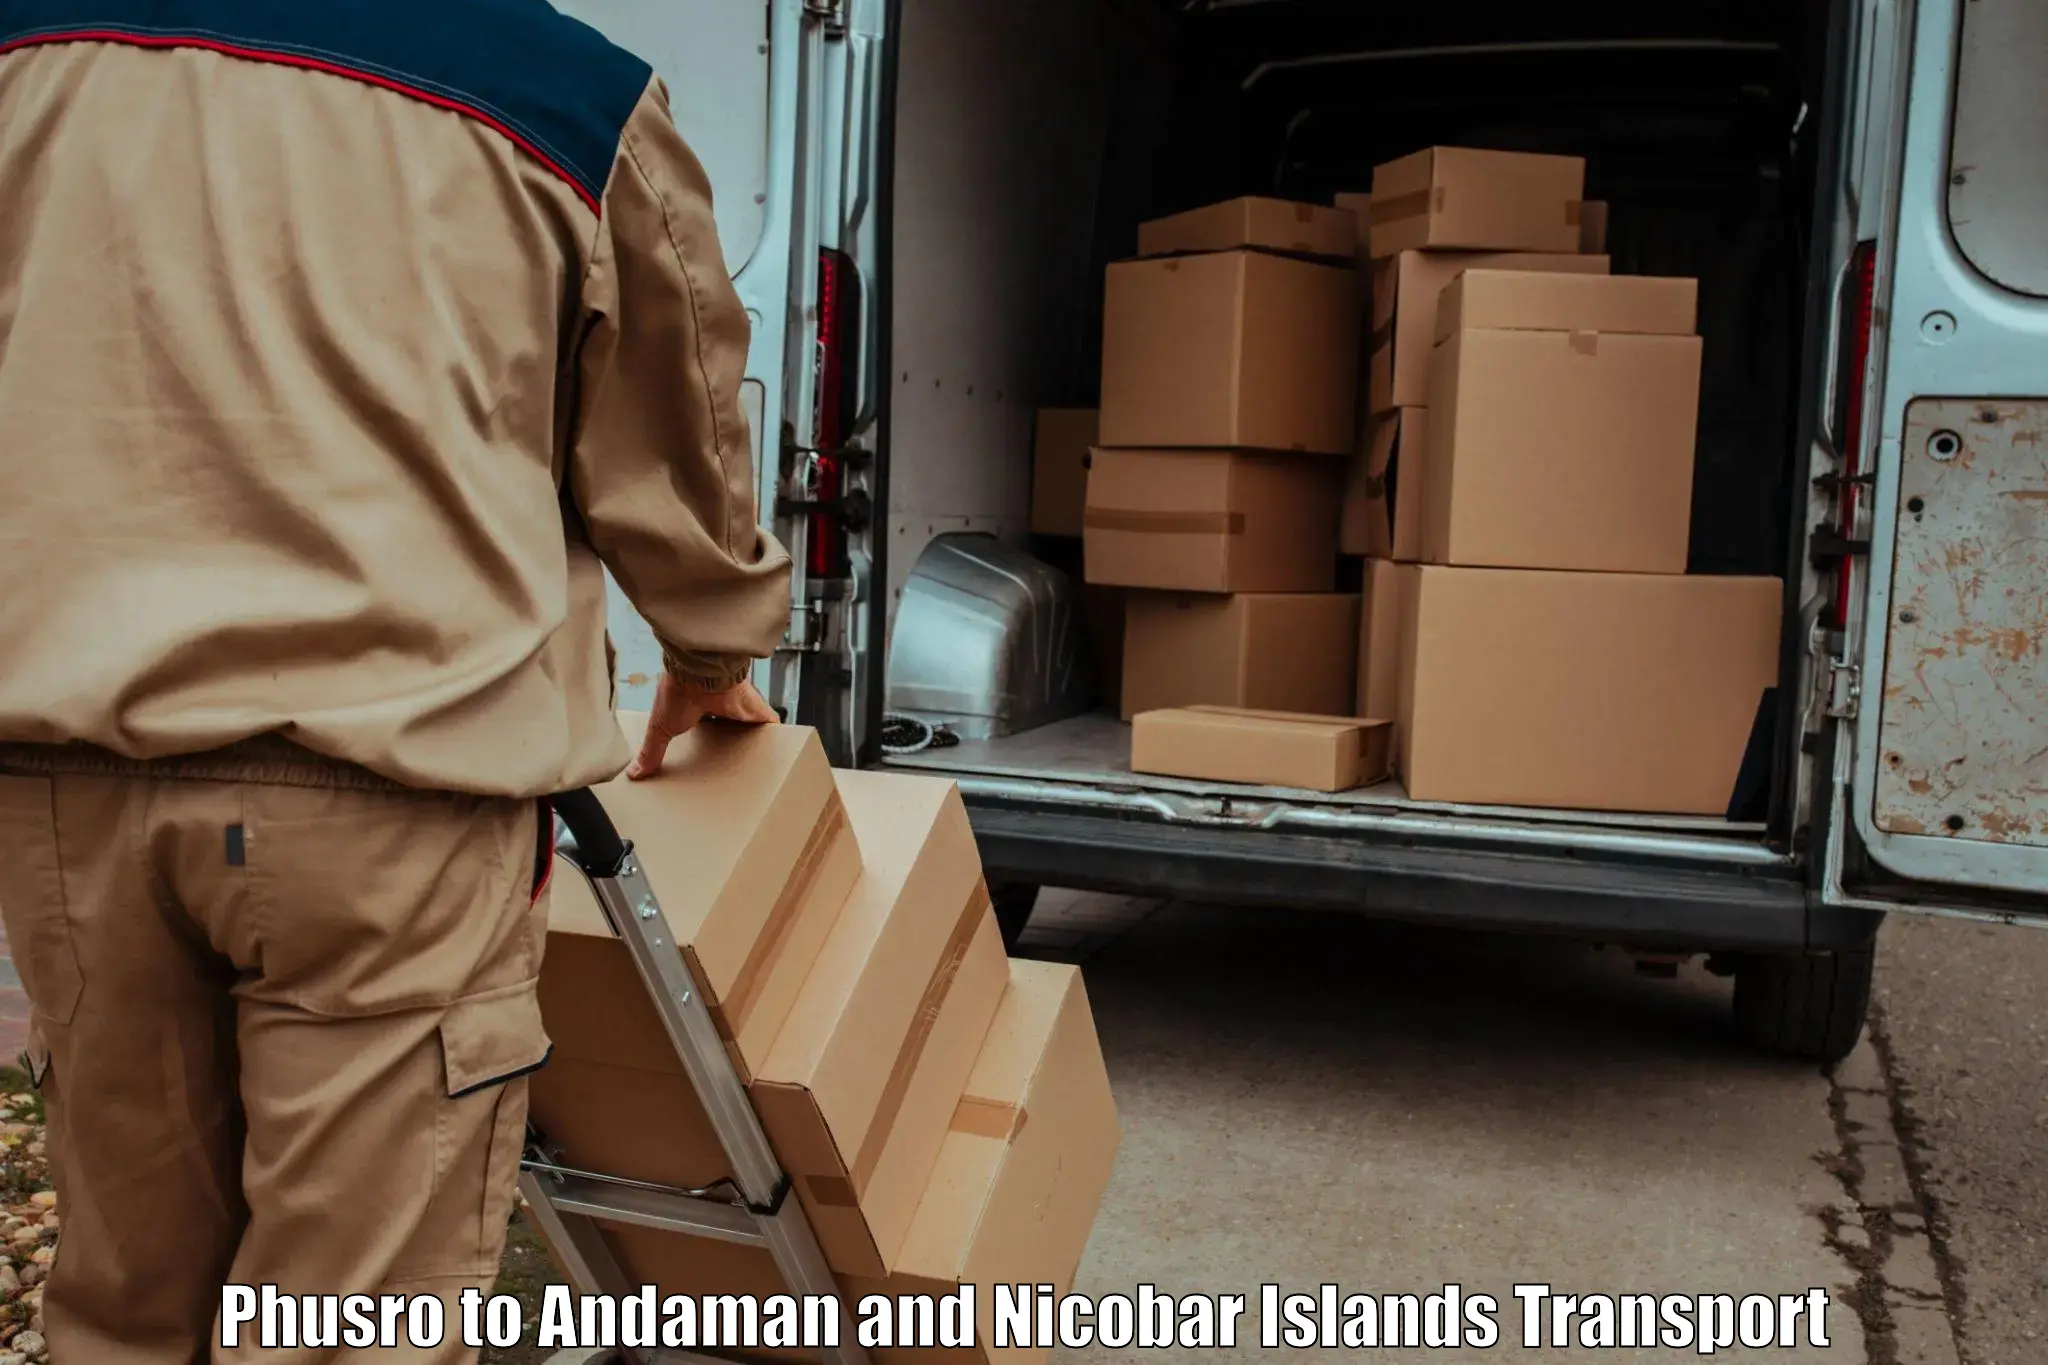 Delivery service Phusro to Andaman and Nicobar Islands